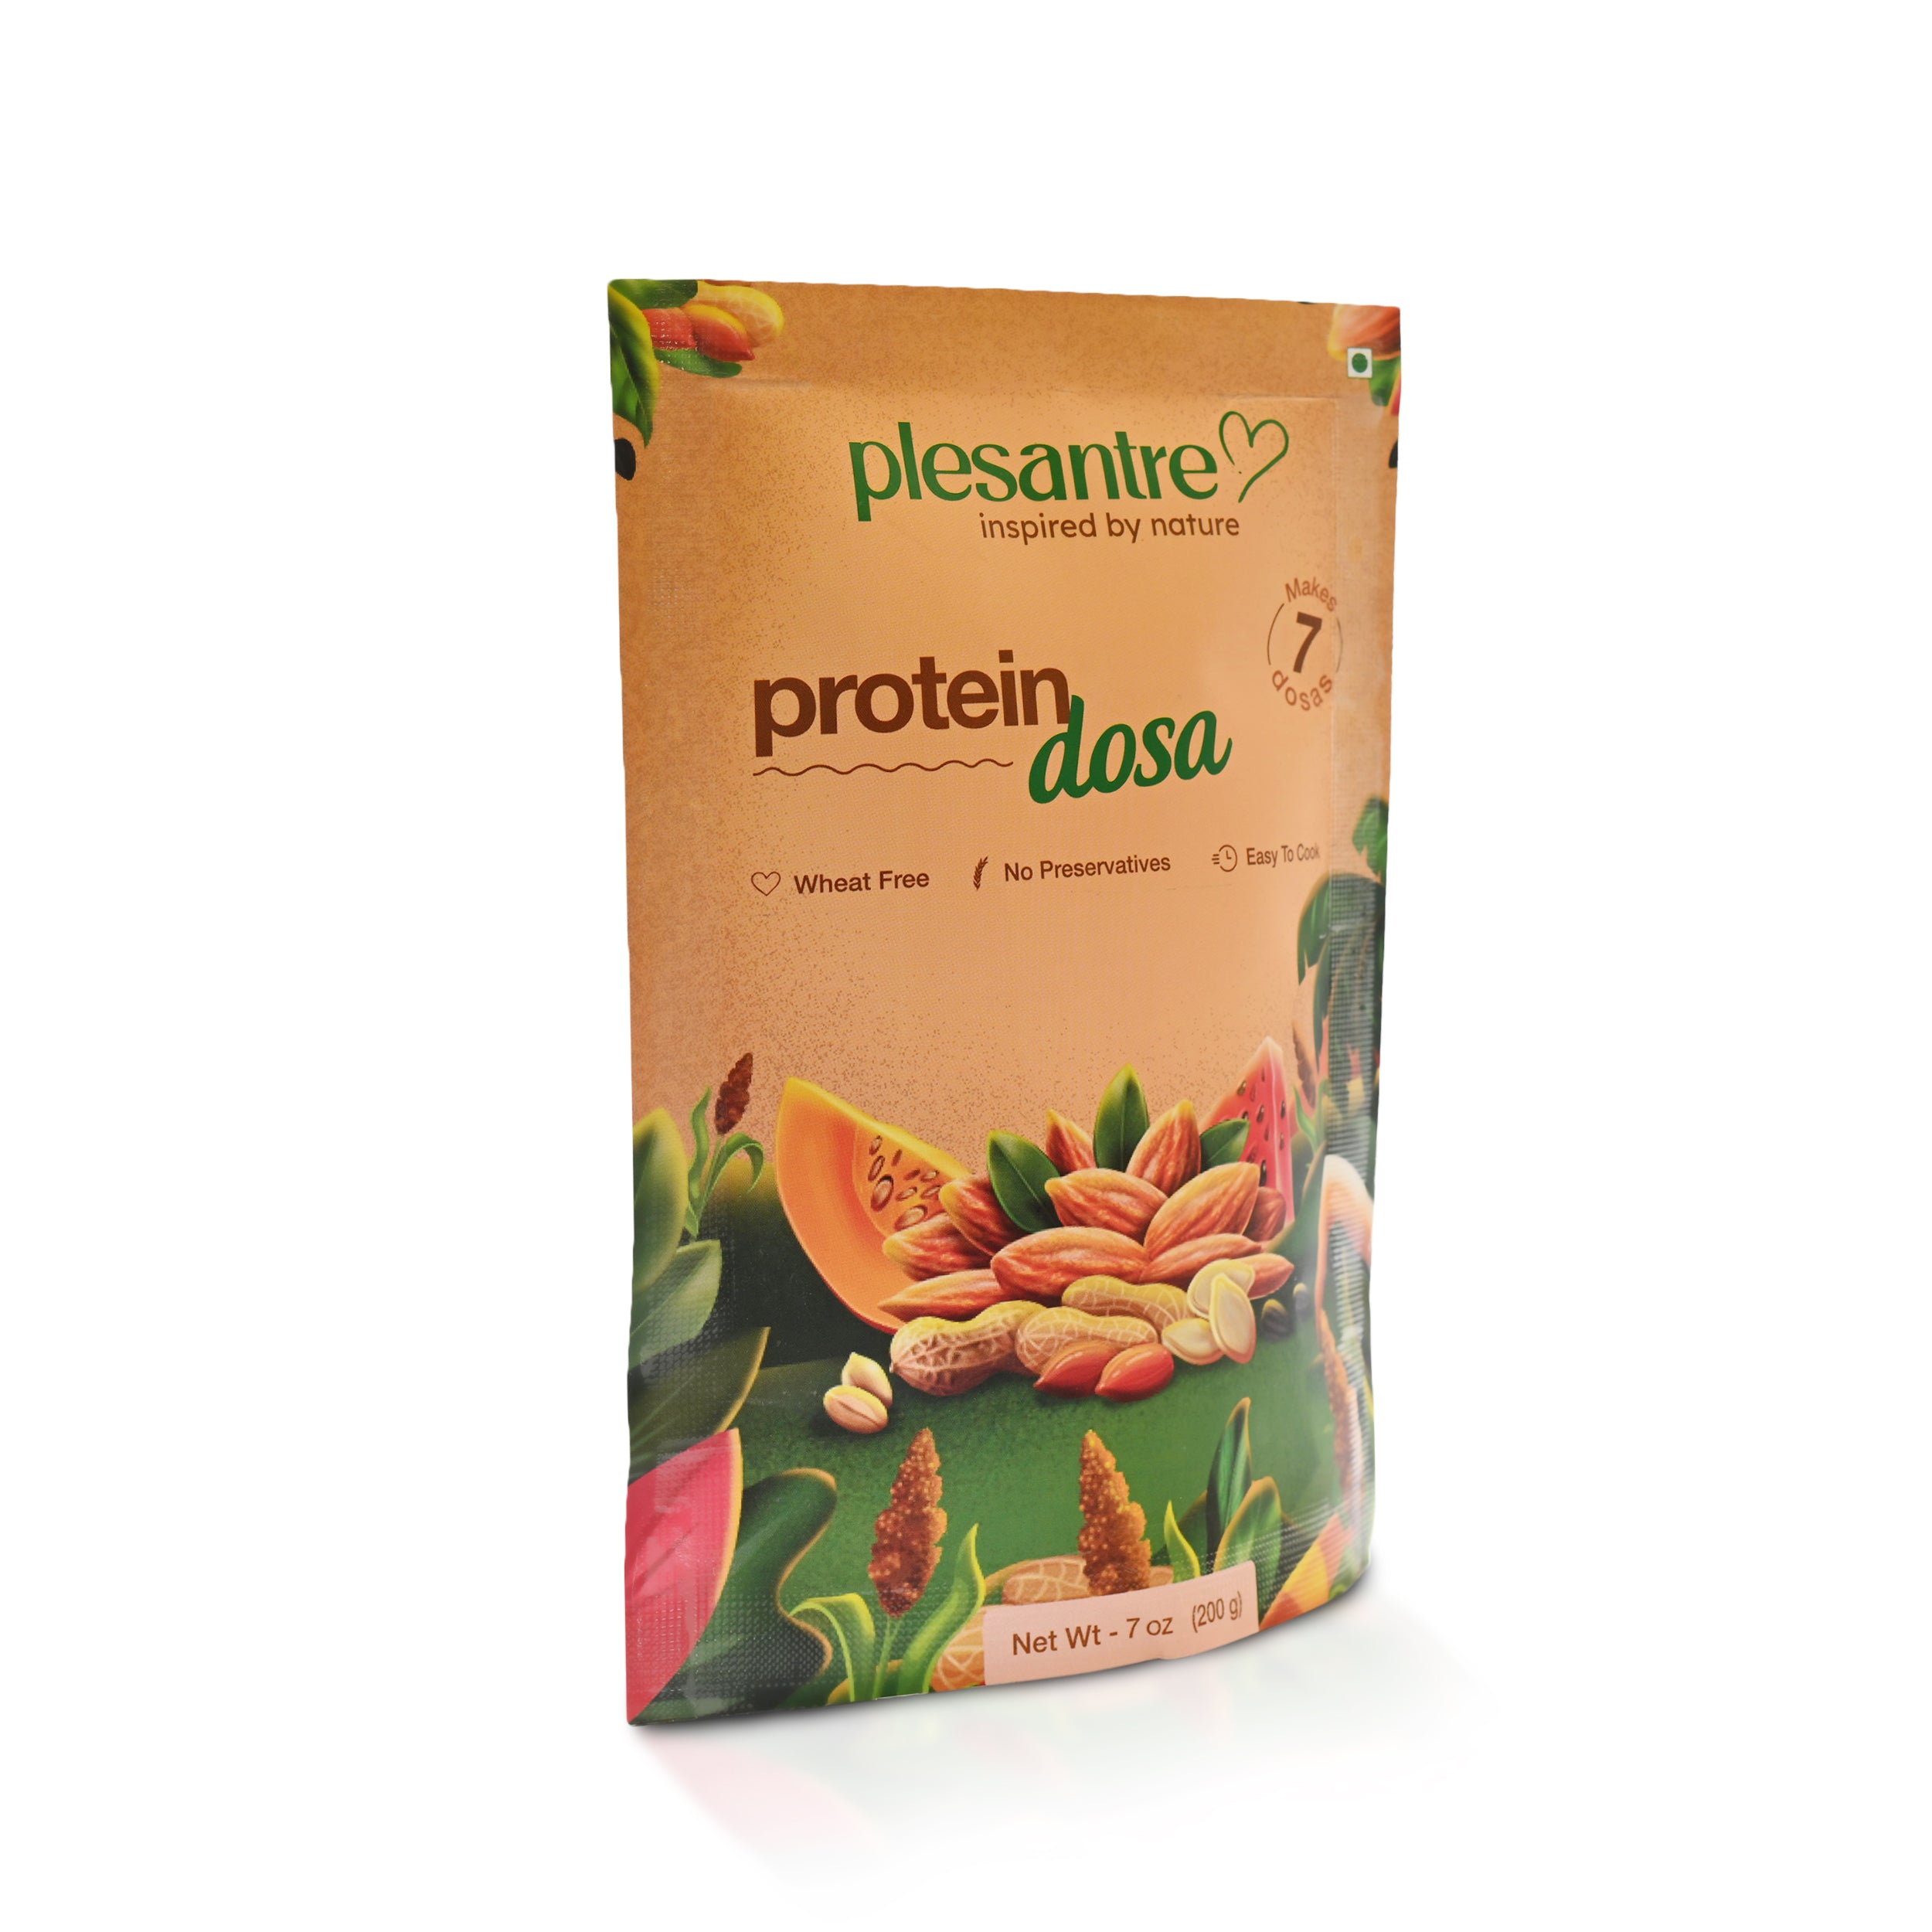 plesantre "Protein Dosa" Instant Delicious Dosa Batter Mix - Healthy Nutritious Breakfast Premix - Plant Proteins, High Fibre, Low GI, Low Carb & Diabetic Friendly - 200g x Pack of 2, Makes 15 Dosas